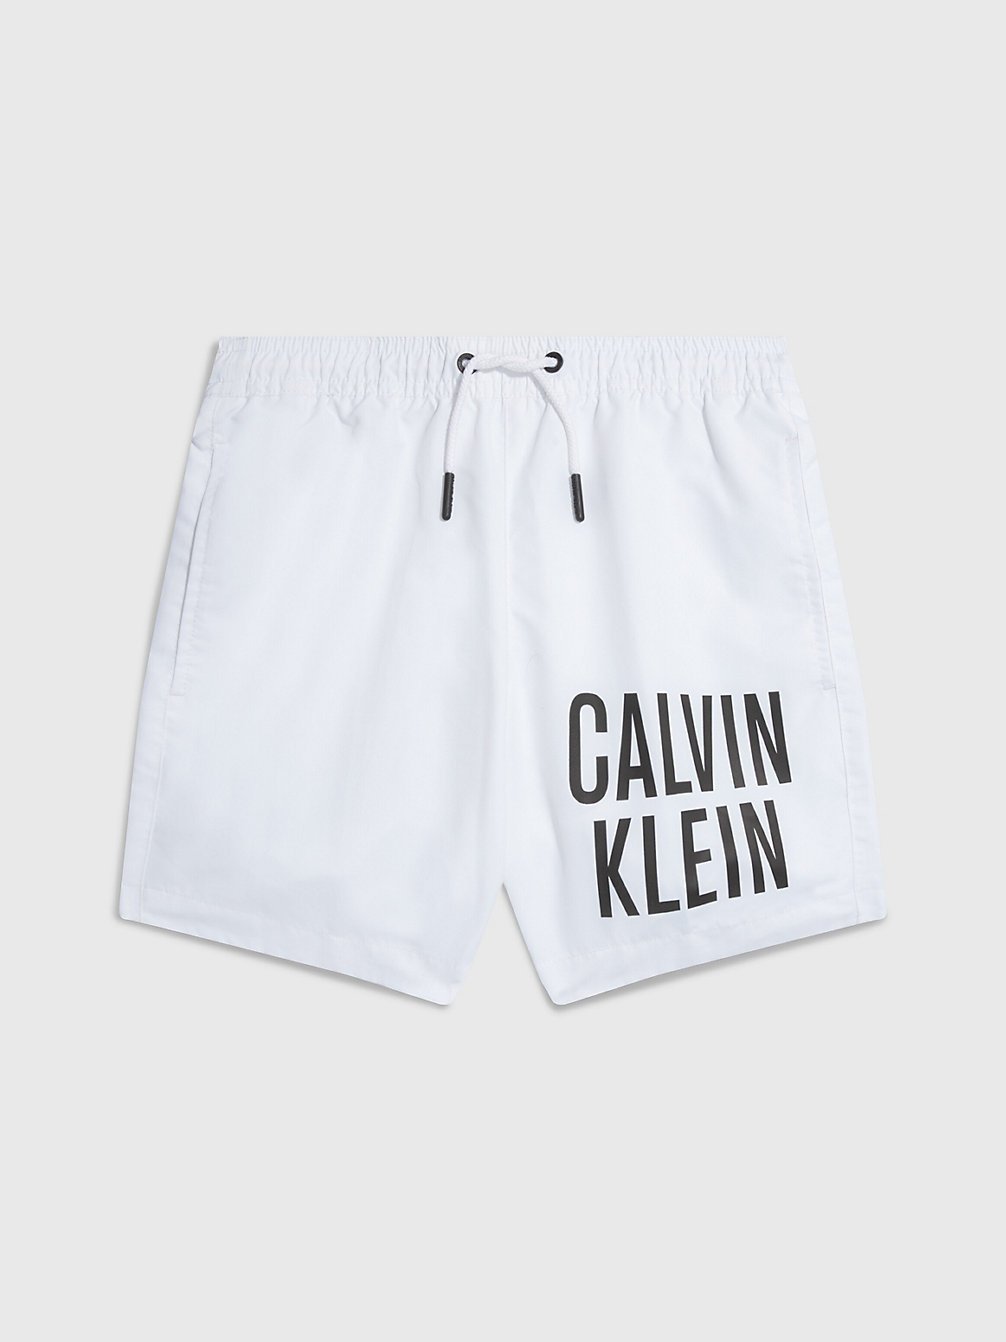 PVH CLASSIC WHITE Short De Bain Pour Garçon - Intense Power undefined garcons Calvin Klein